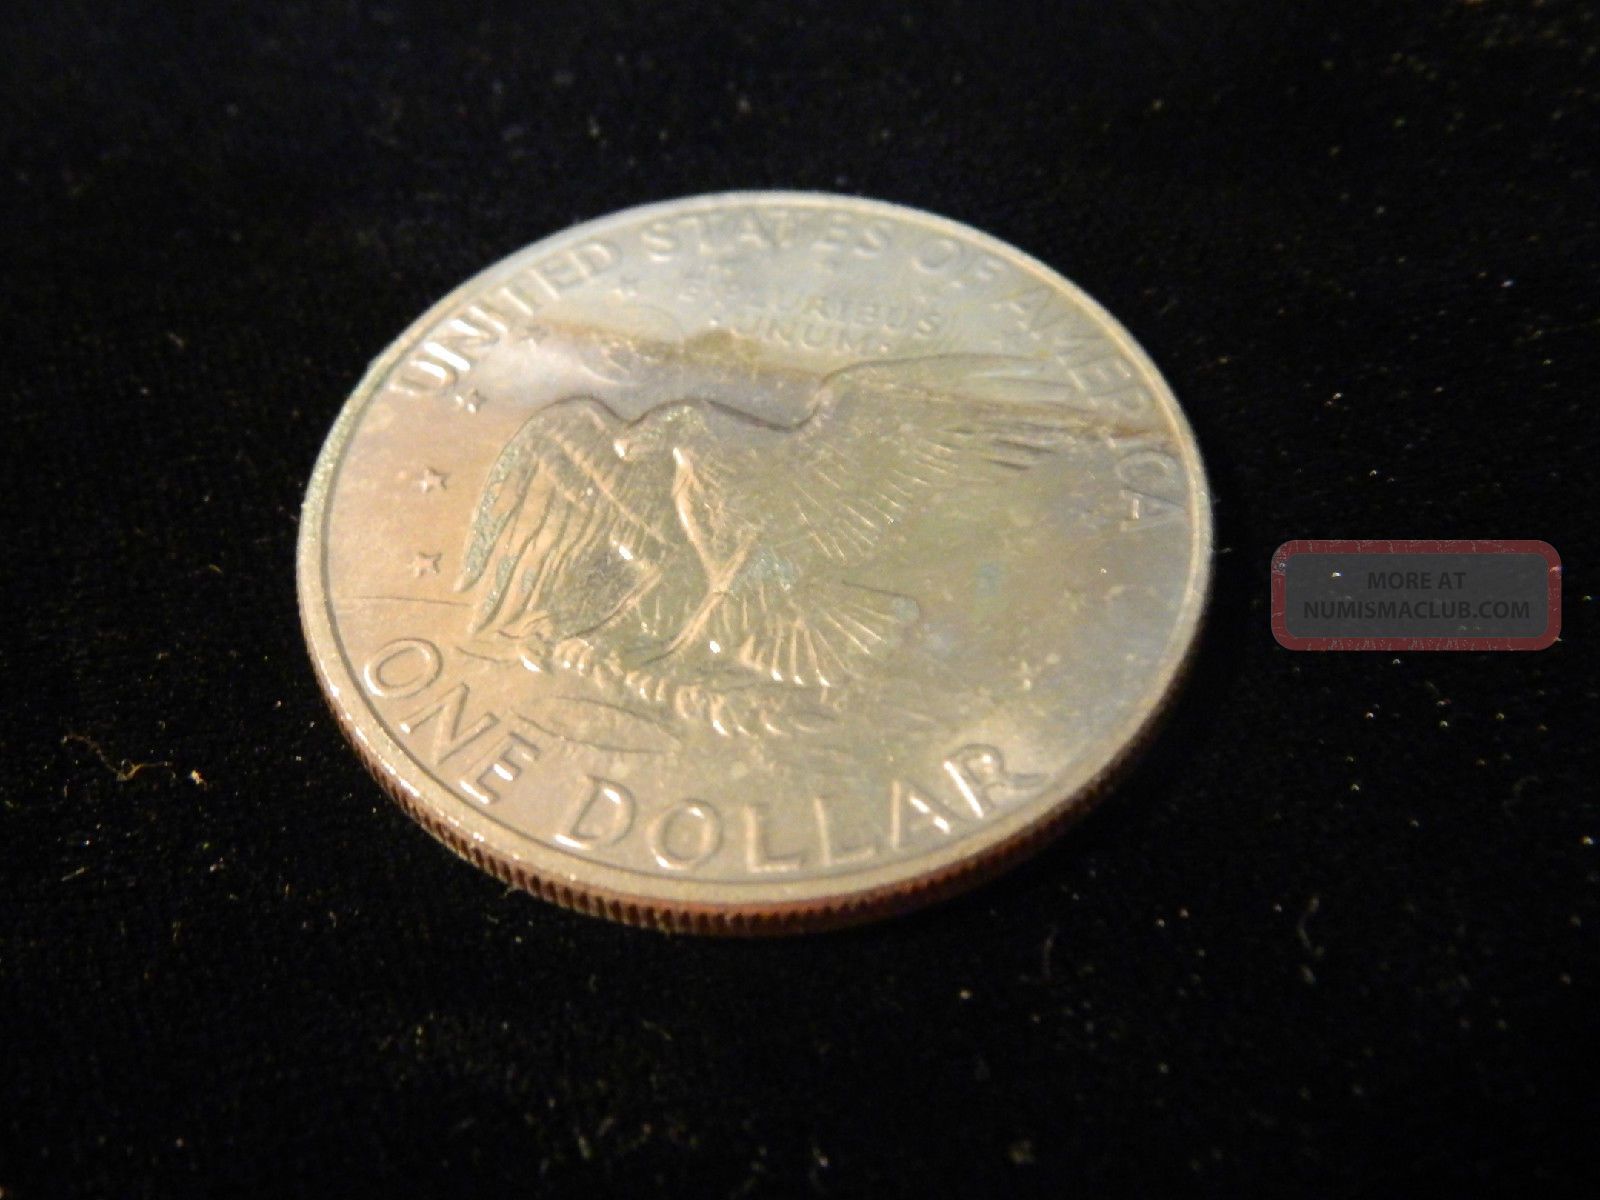 eisenhower 1972 dollar coin value